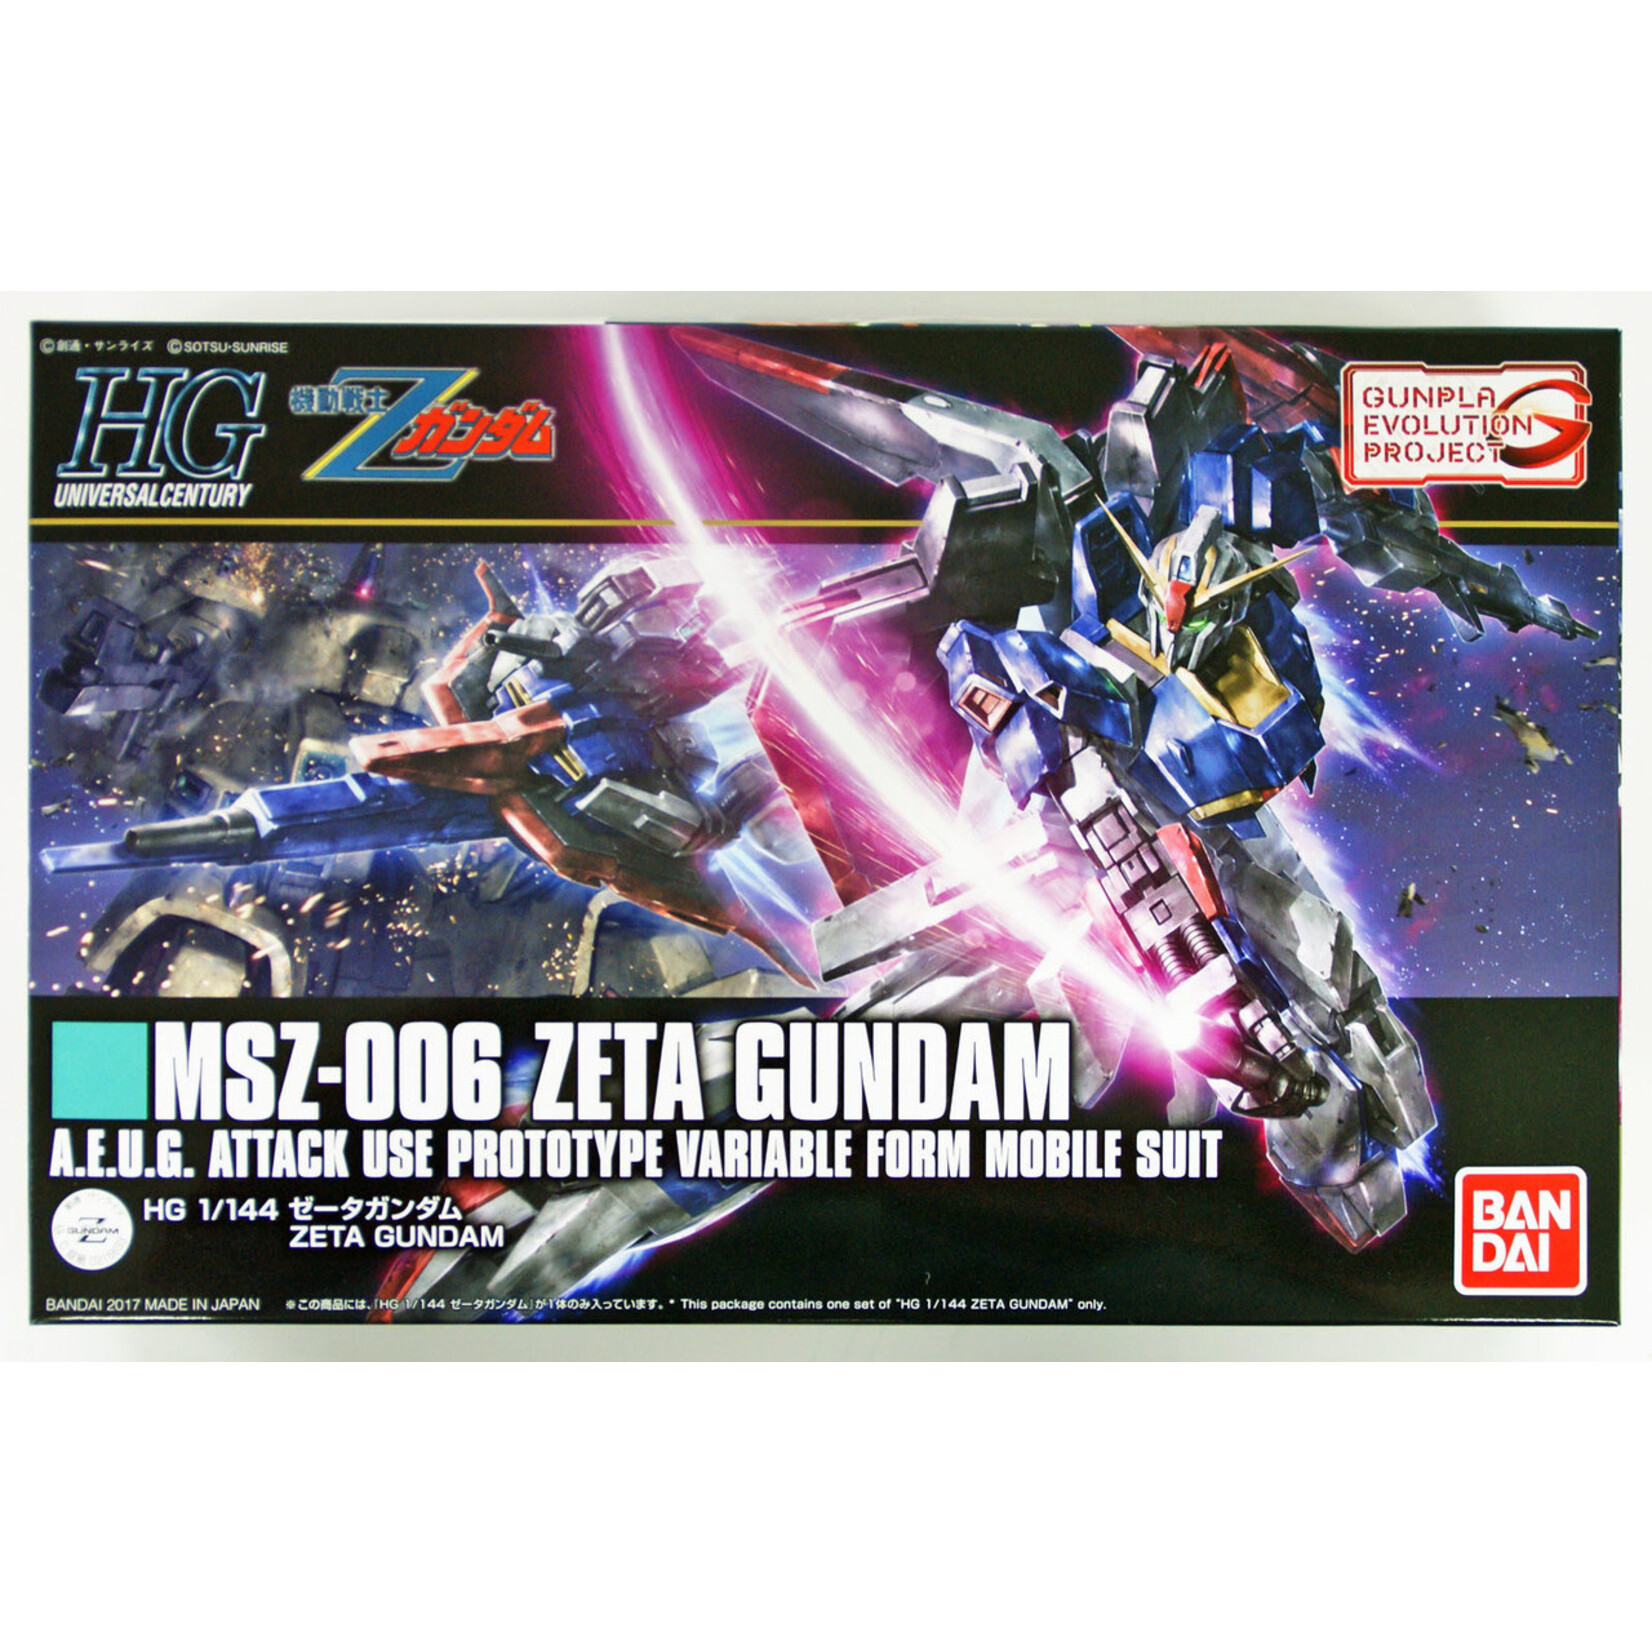 Bandai Bandai HGUC #203 1/144 Zeta Gundam